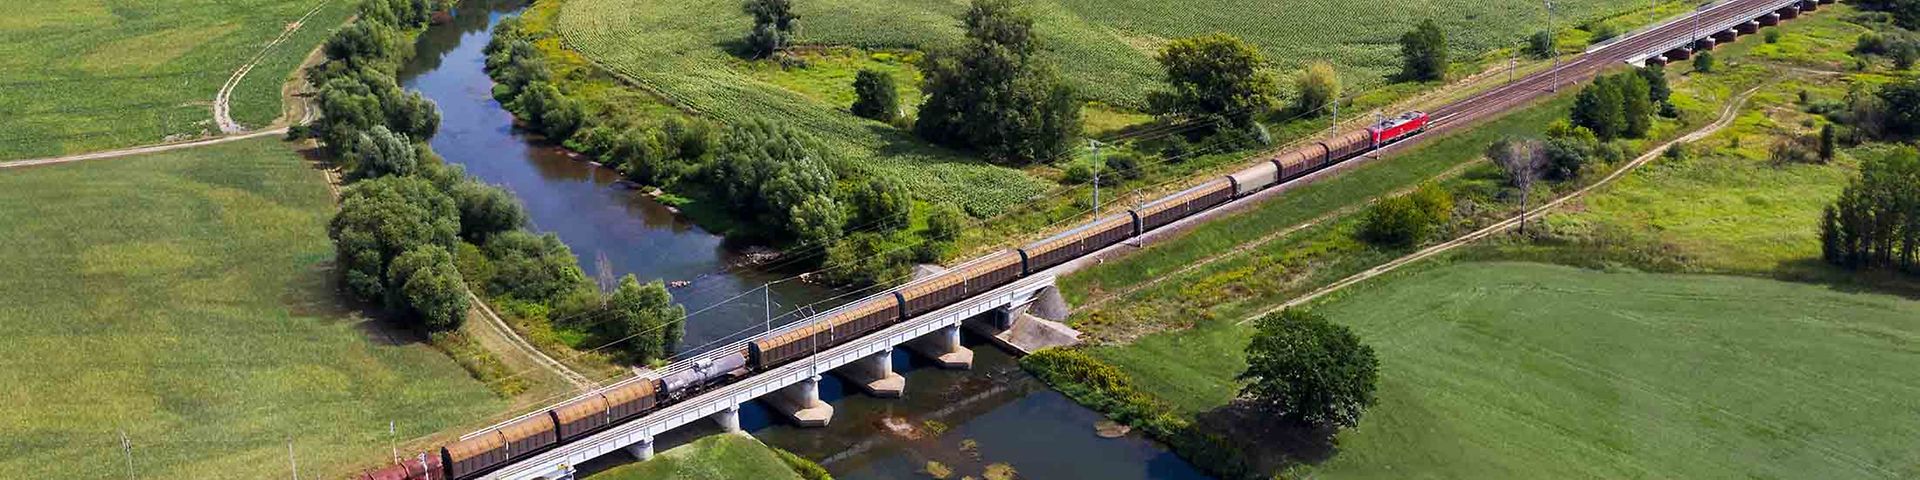 Güterzug fährt über einen Fluss inmitten grüner Landschaft.